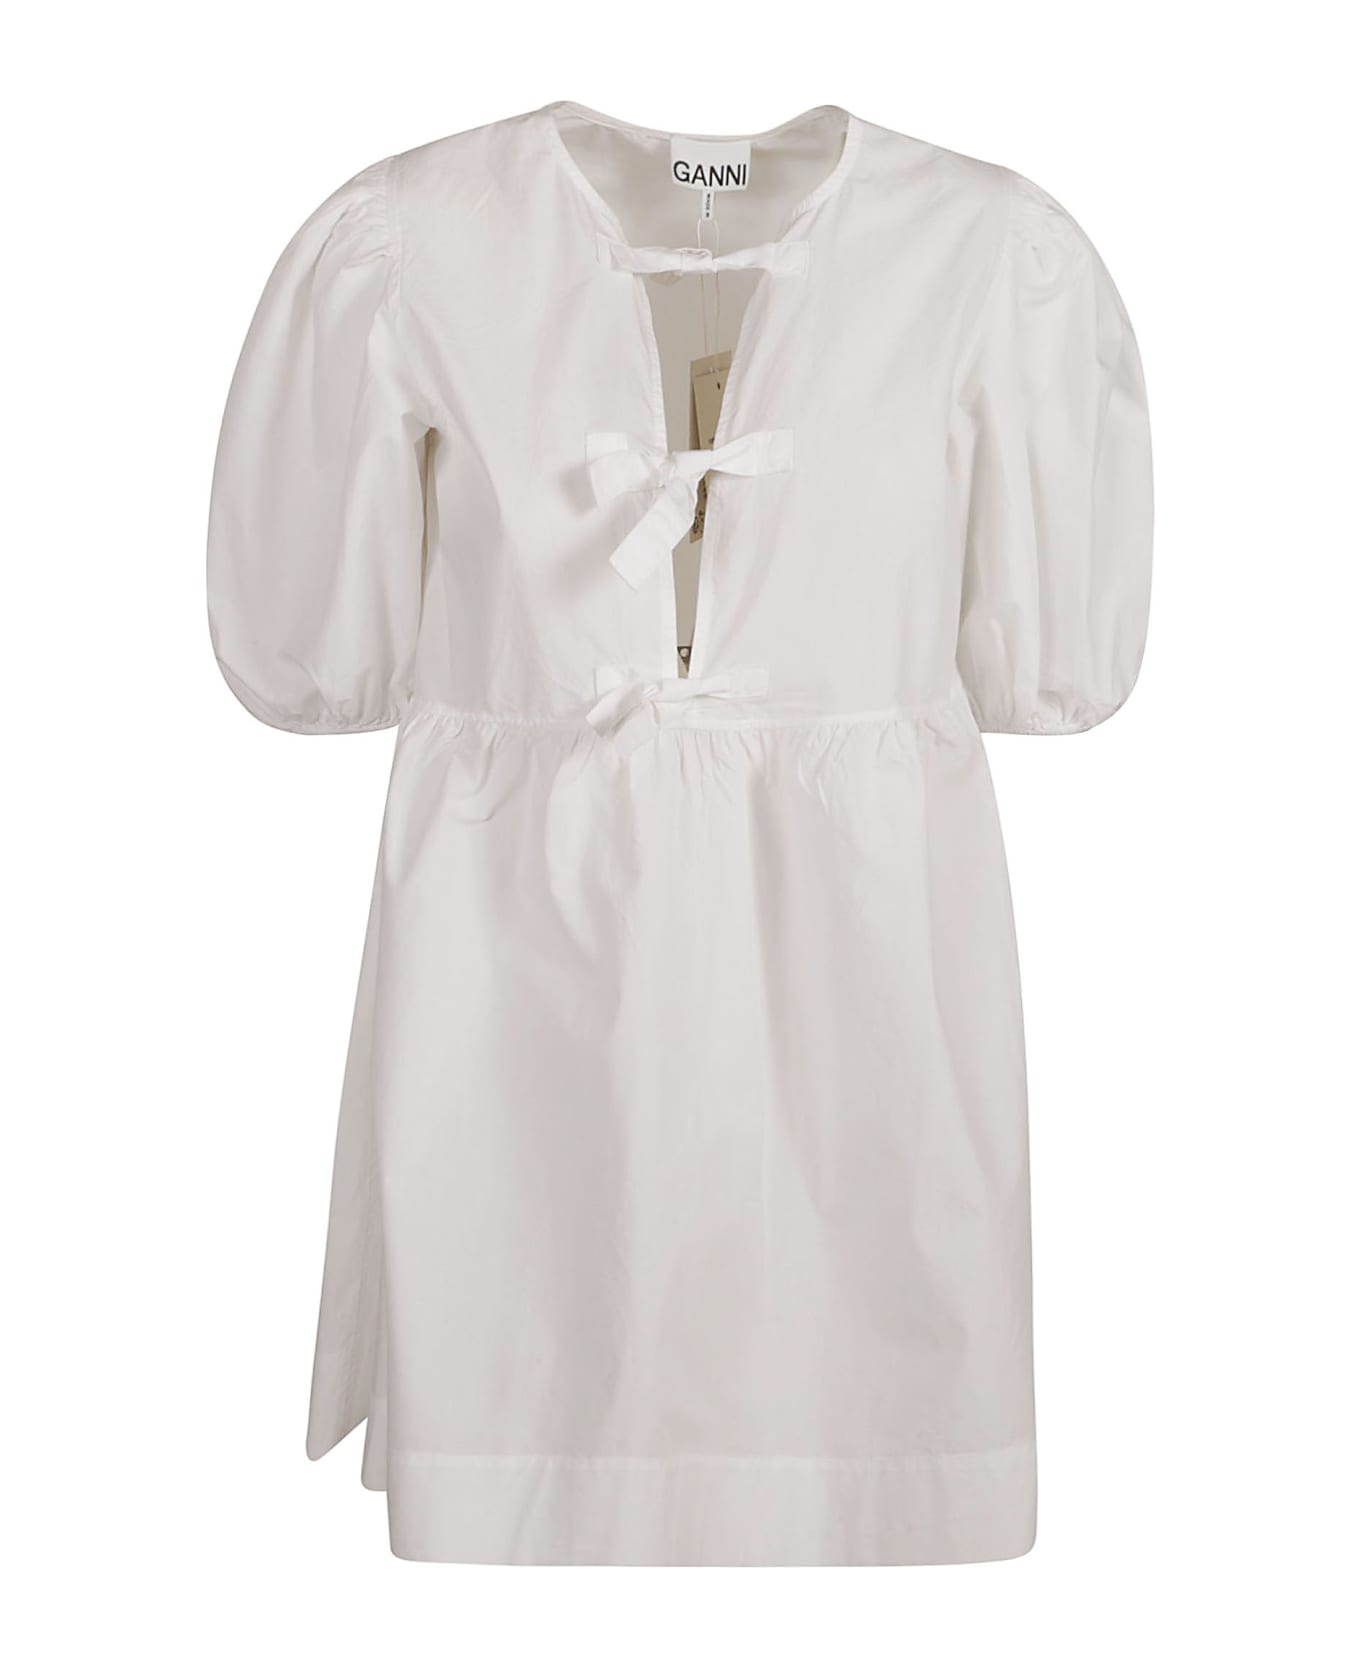 Ganni Knot Poplin Dress - Bright White